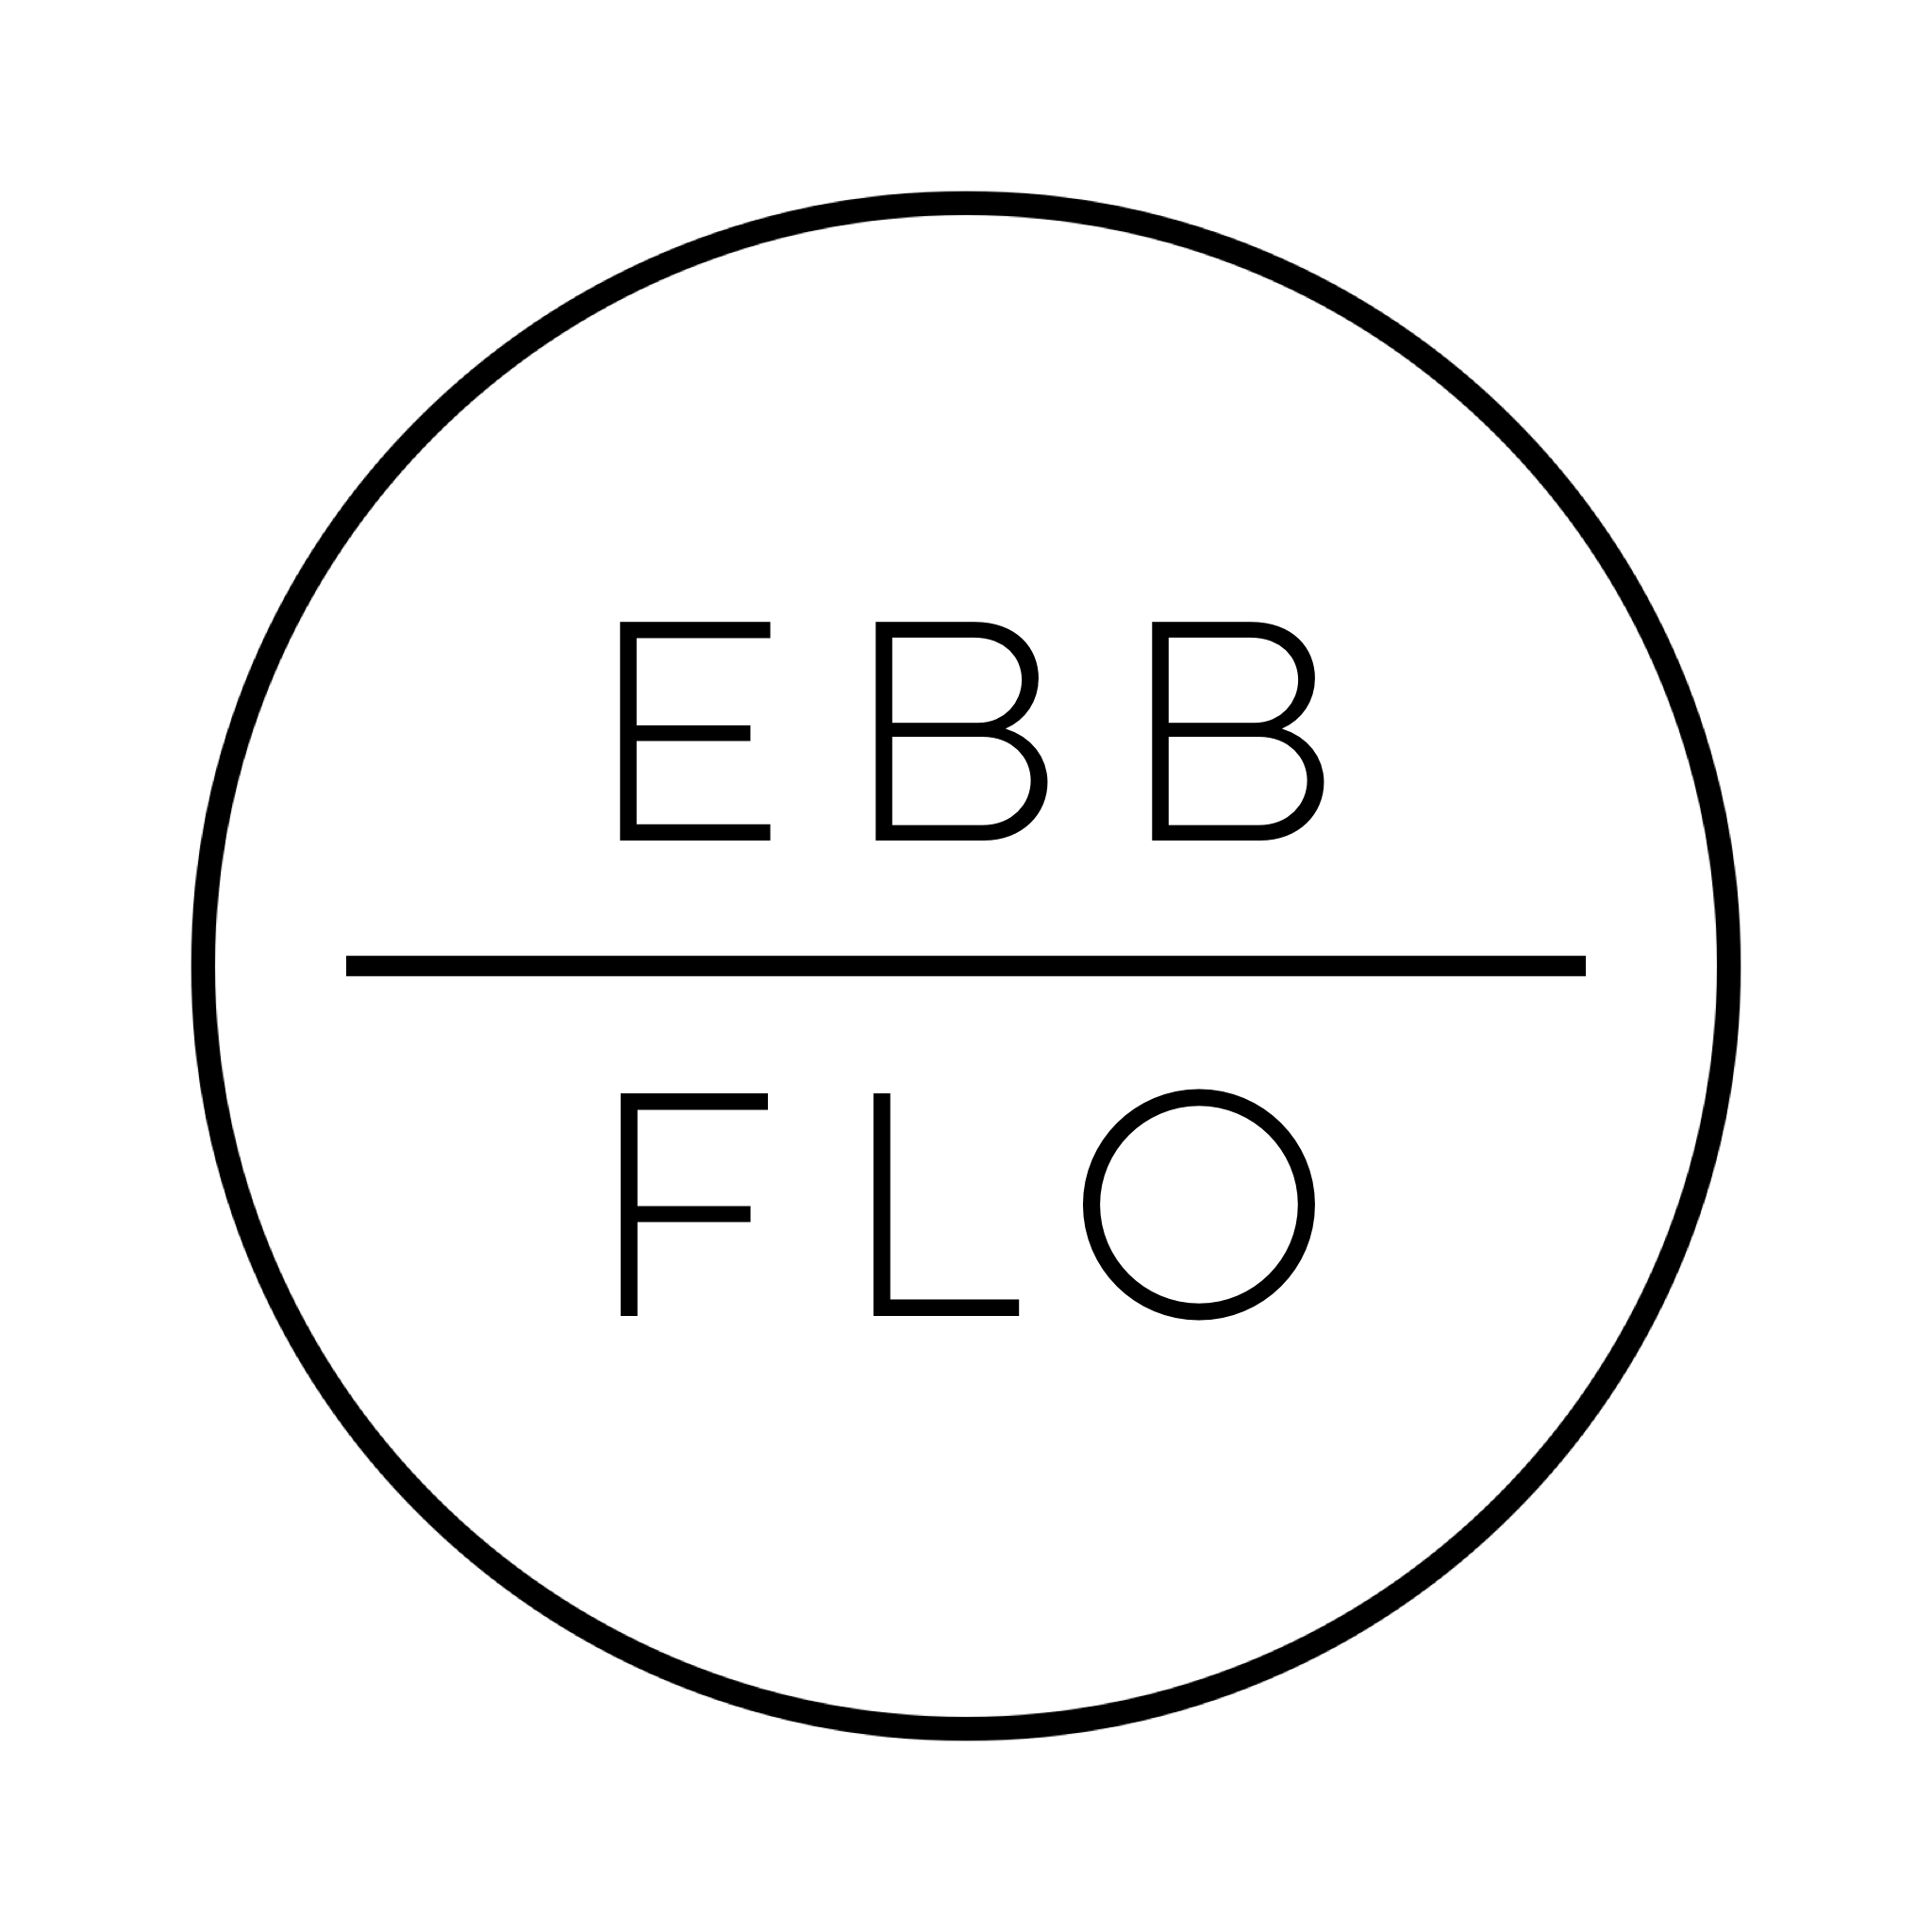 EBB & FLO